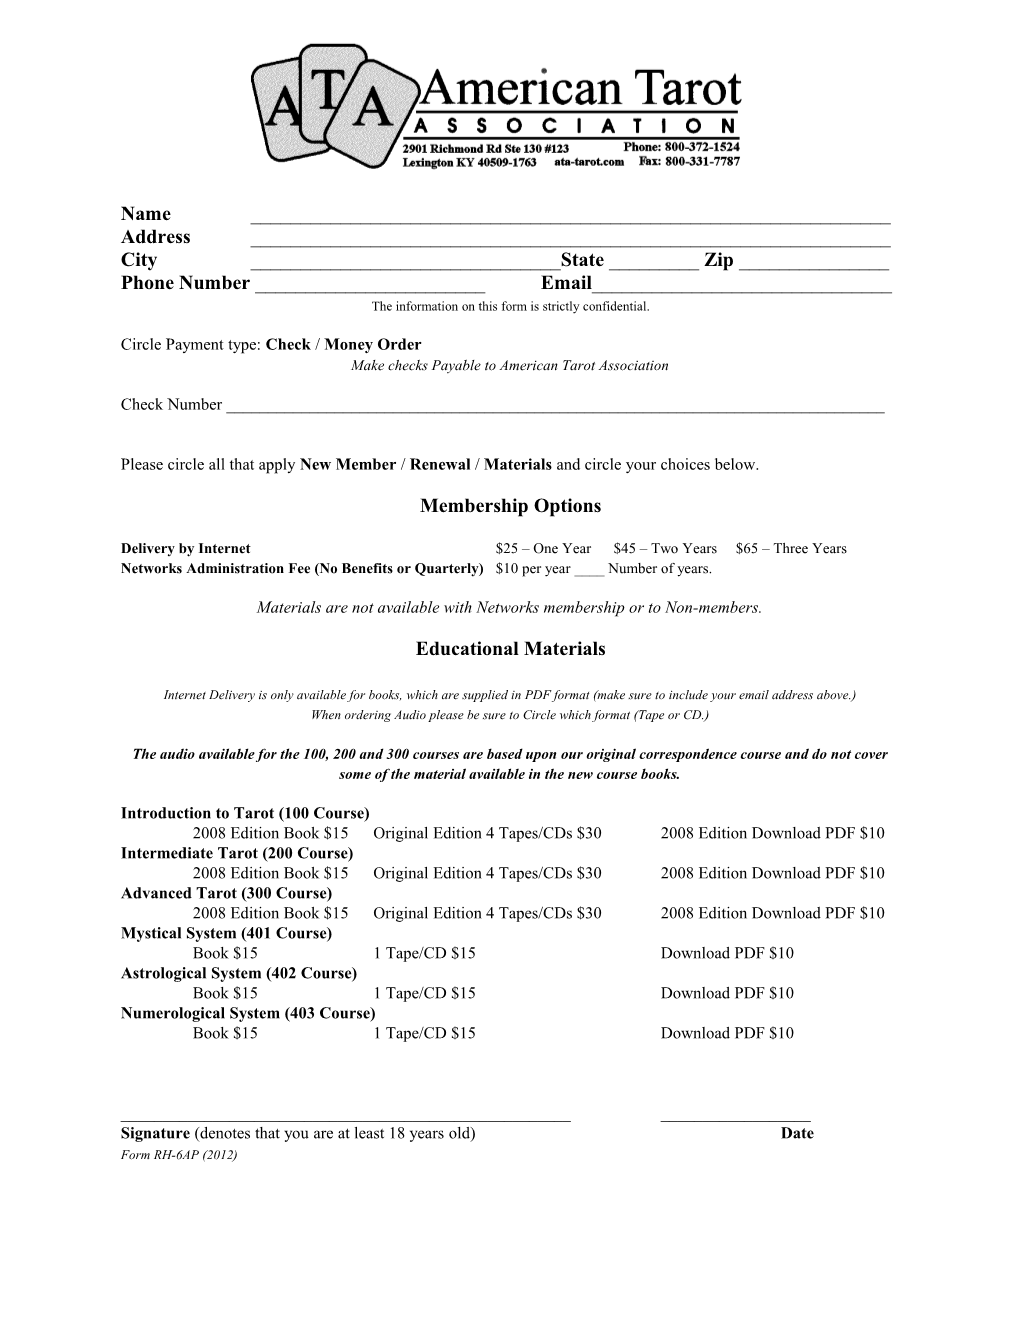 ATA Application Form